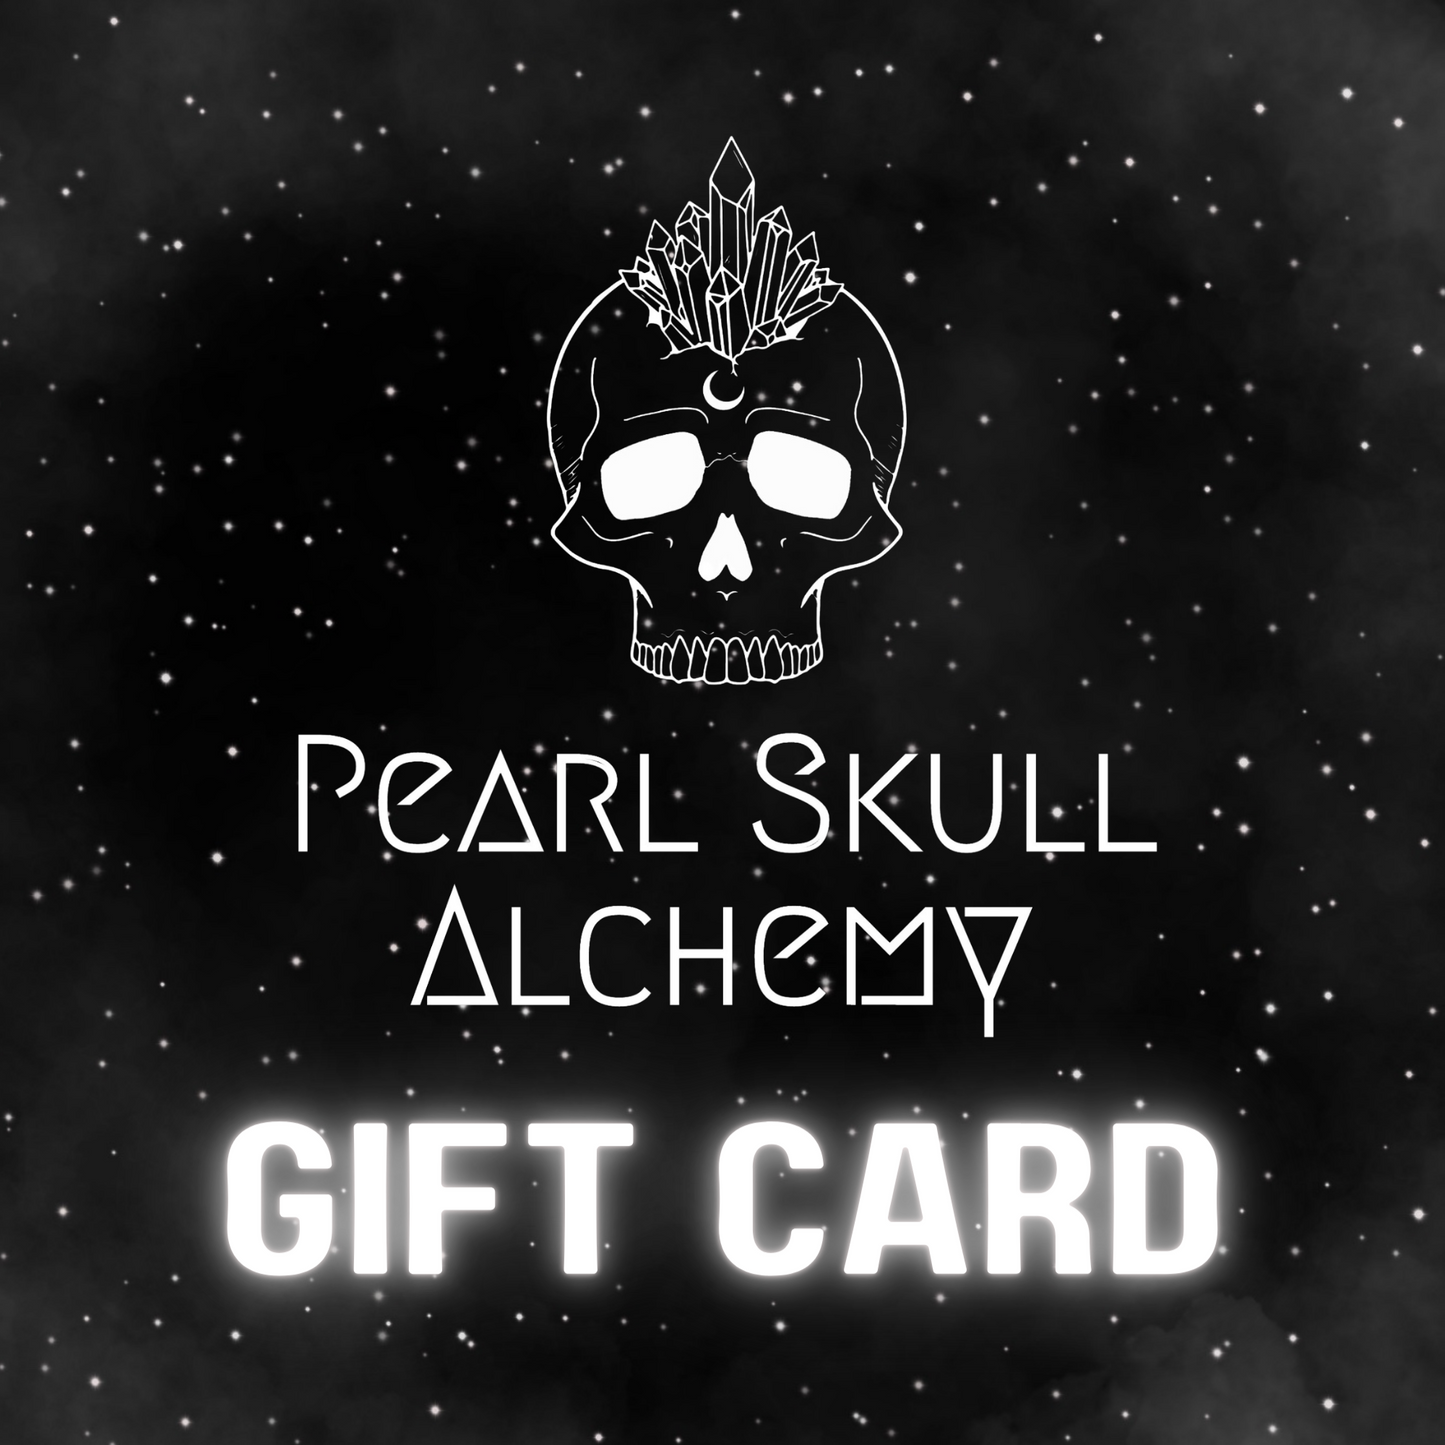 Pearl Skull Alchemy Gift Card